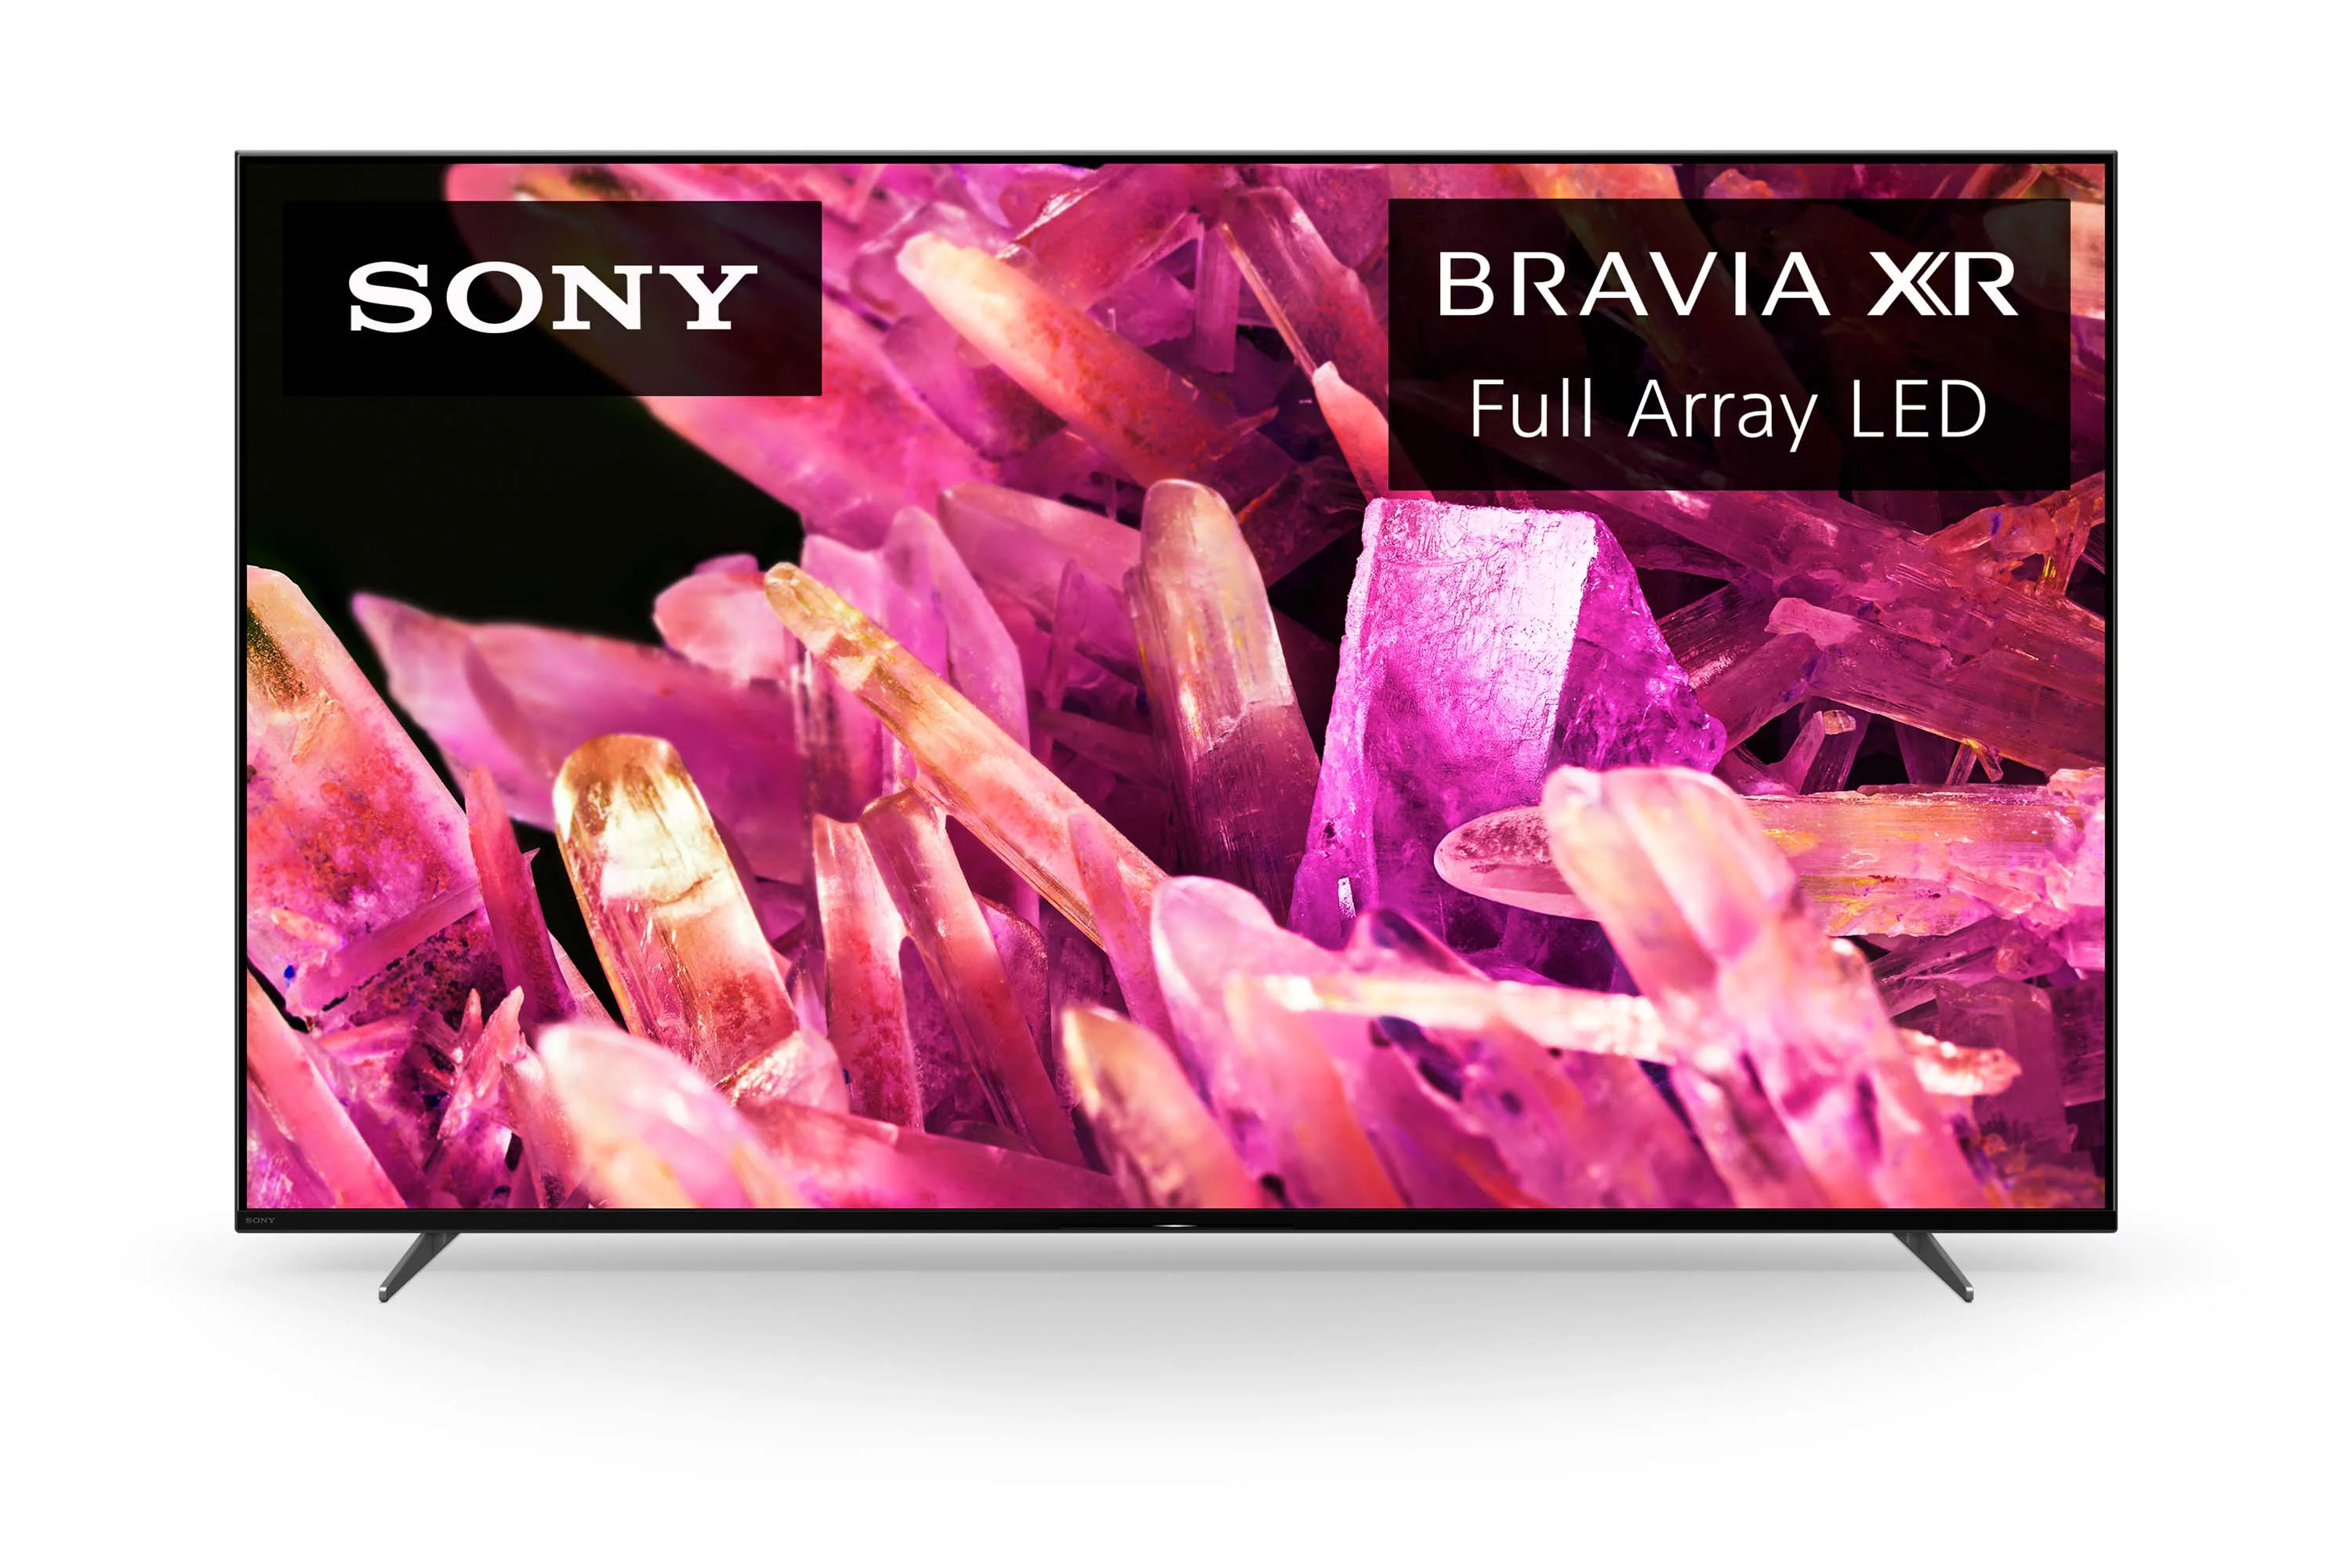 Телевизор Sony Bravia X90K XR-85X90K